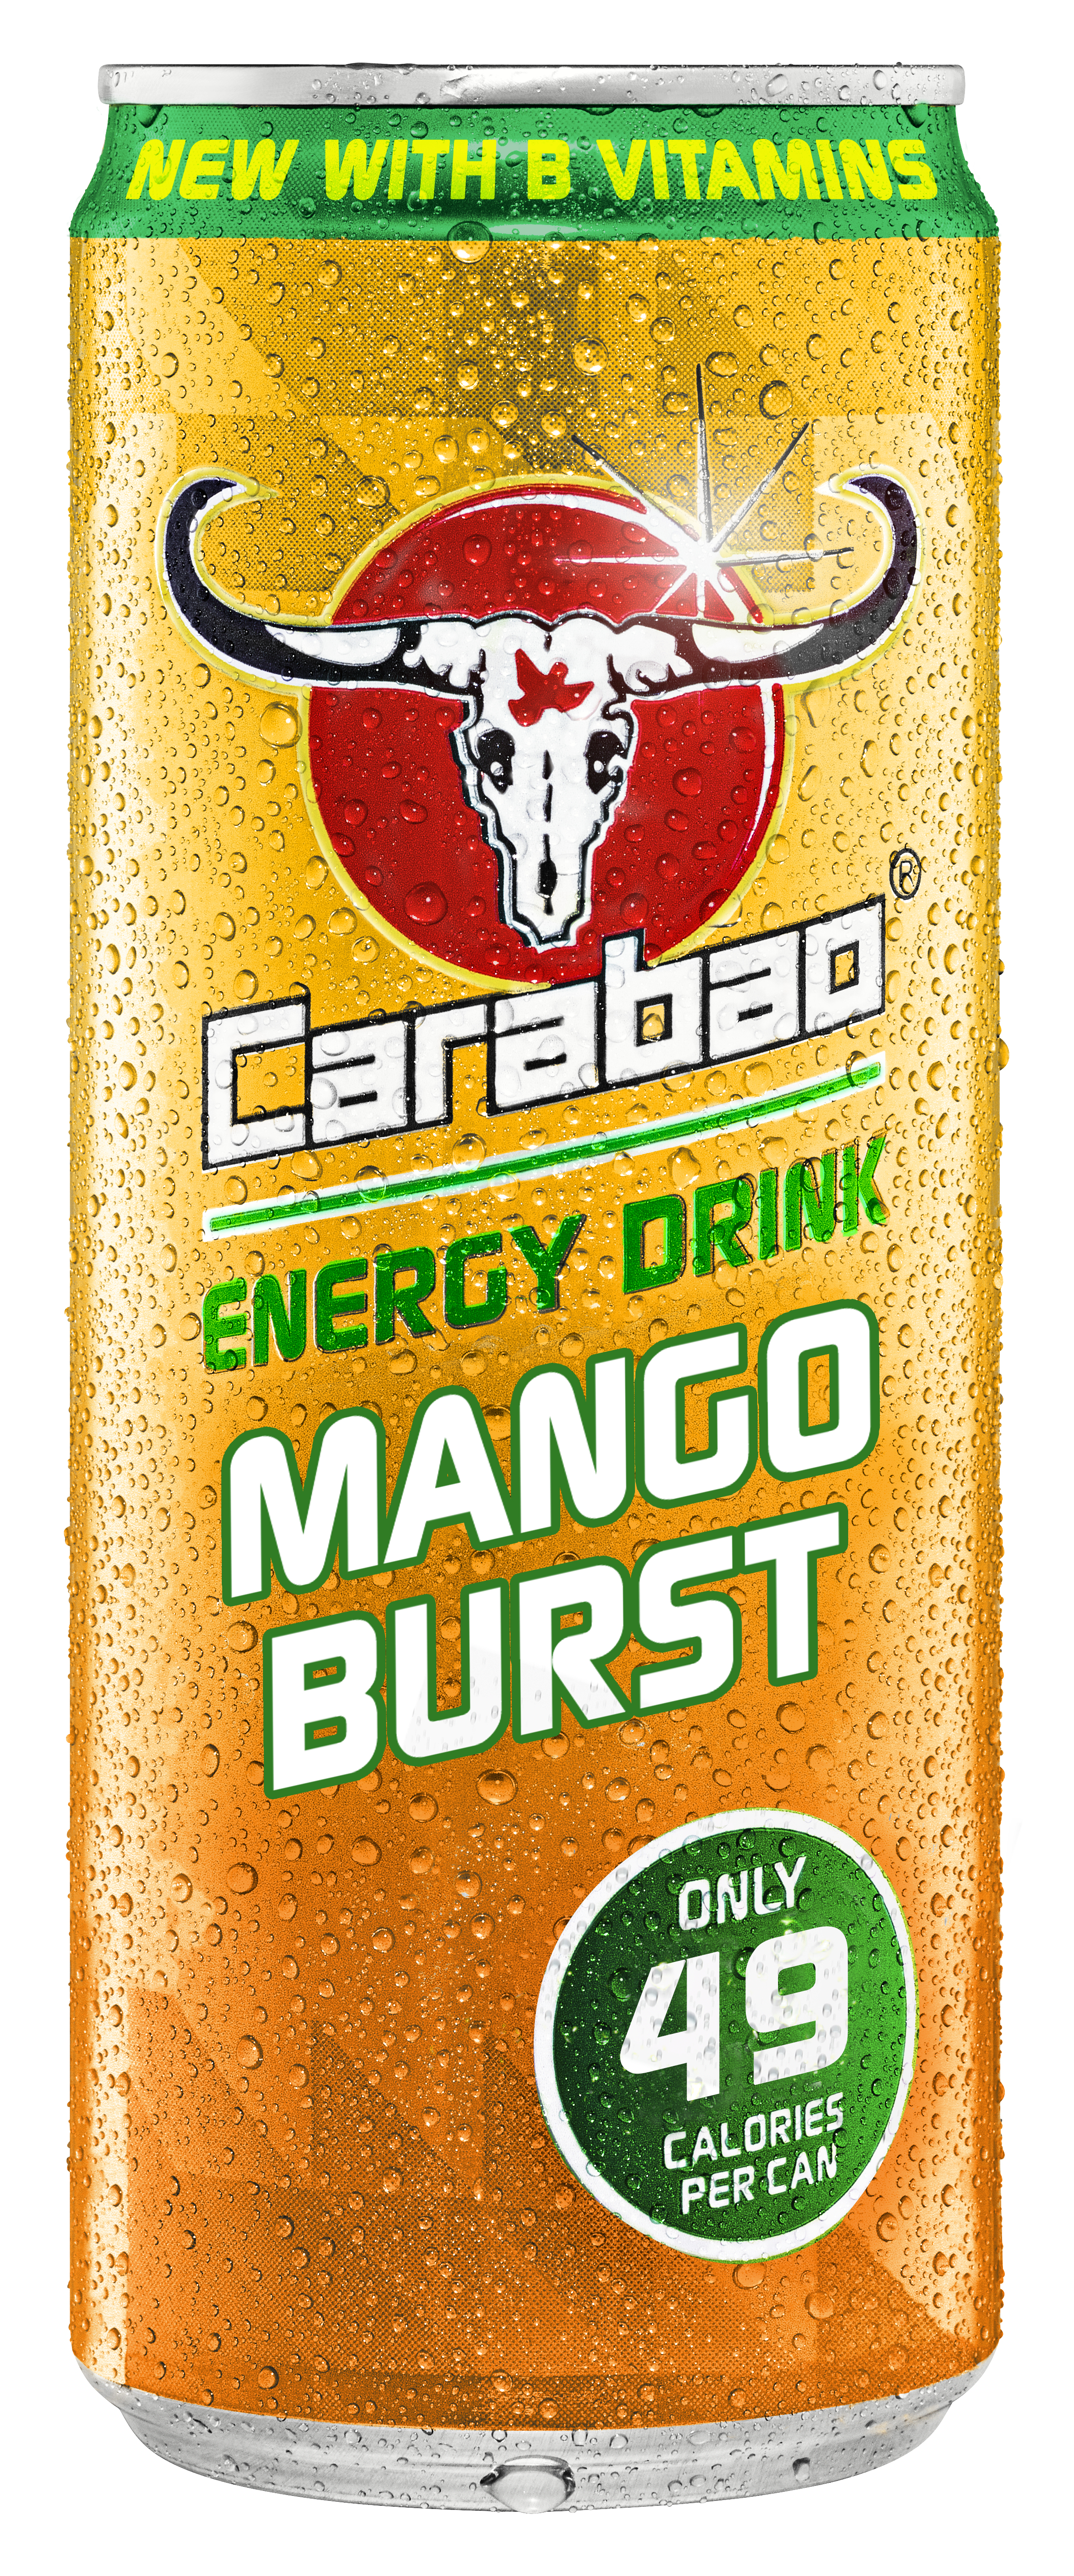 Carabao Energy set to launch new mango burst flavour